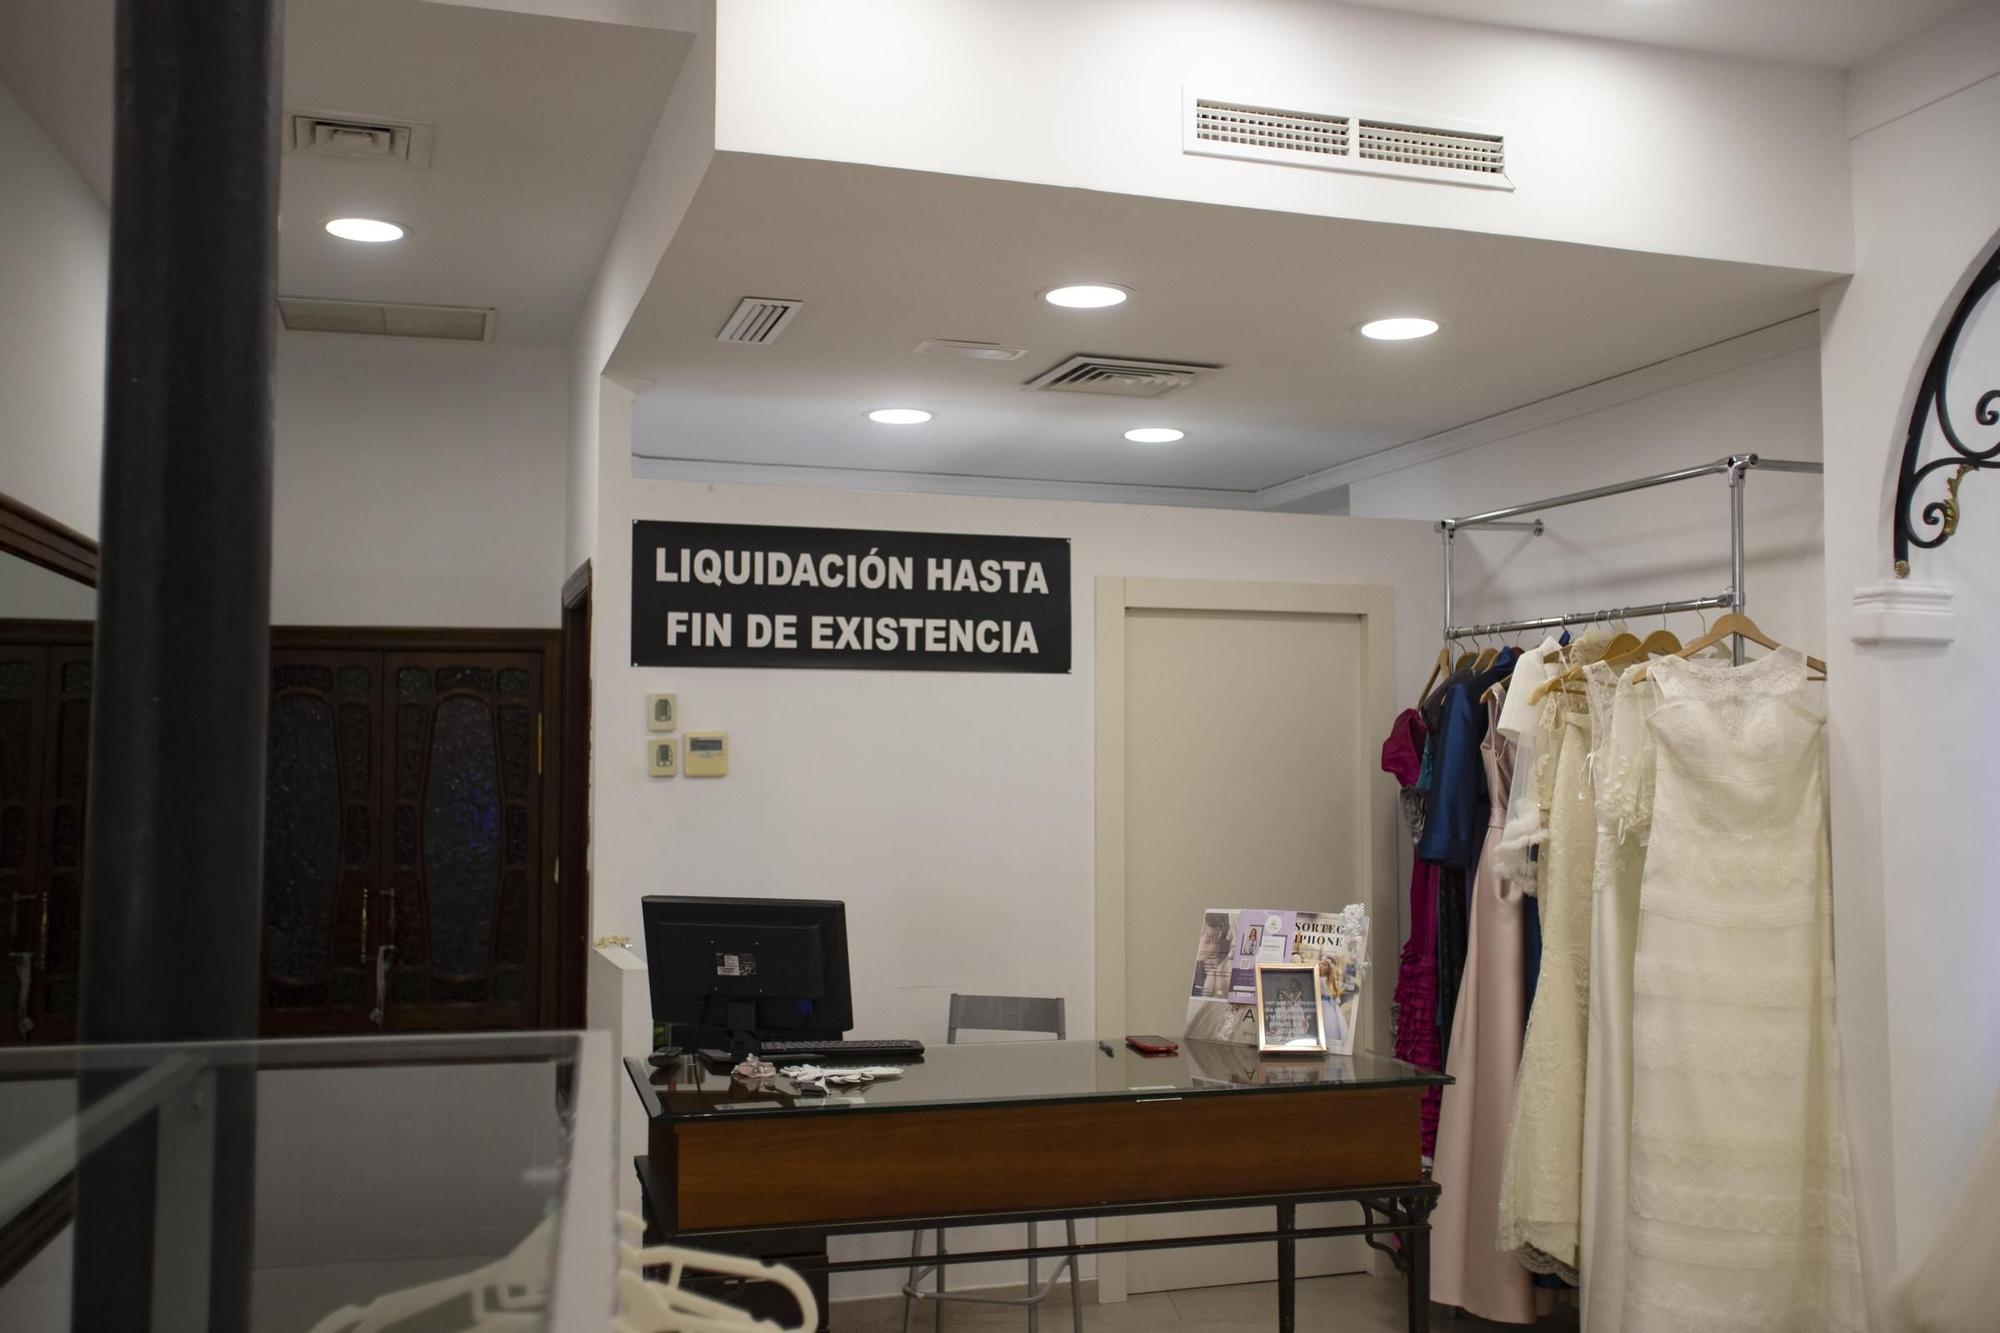 Otra tienda histórica baja la persiana en Xàtiva